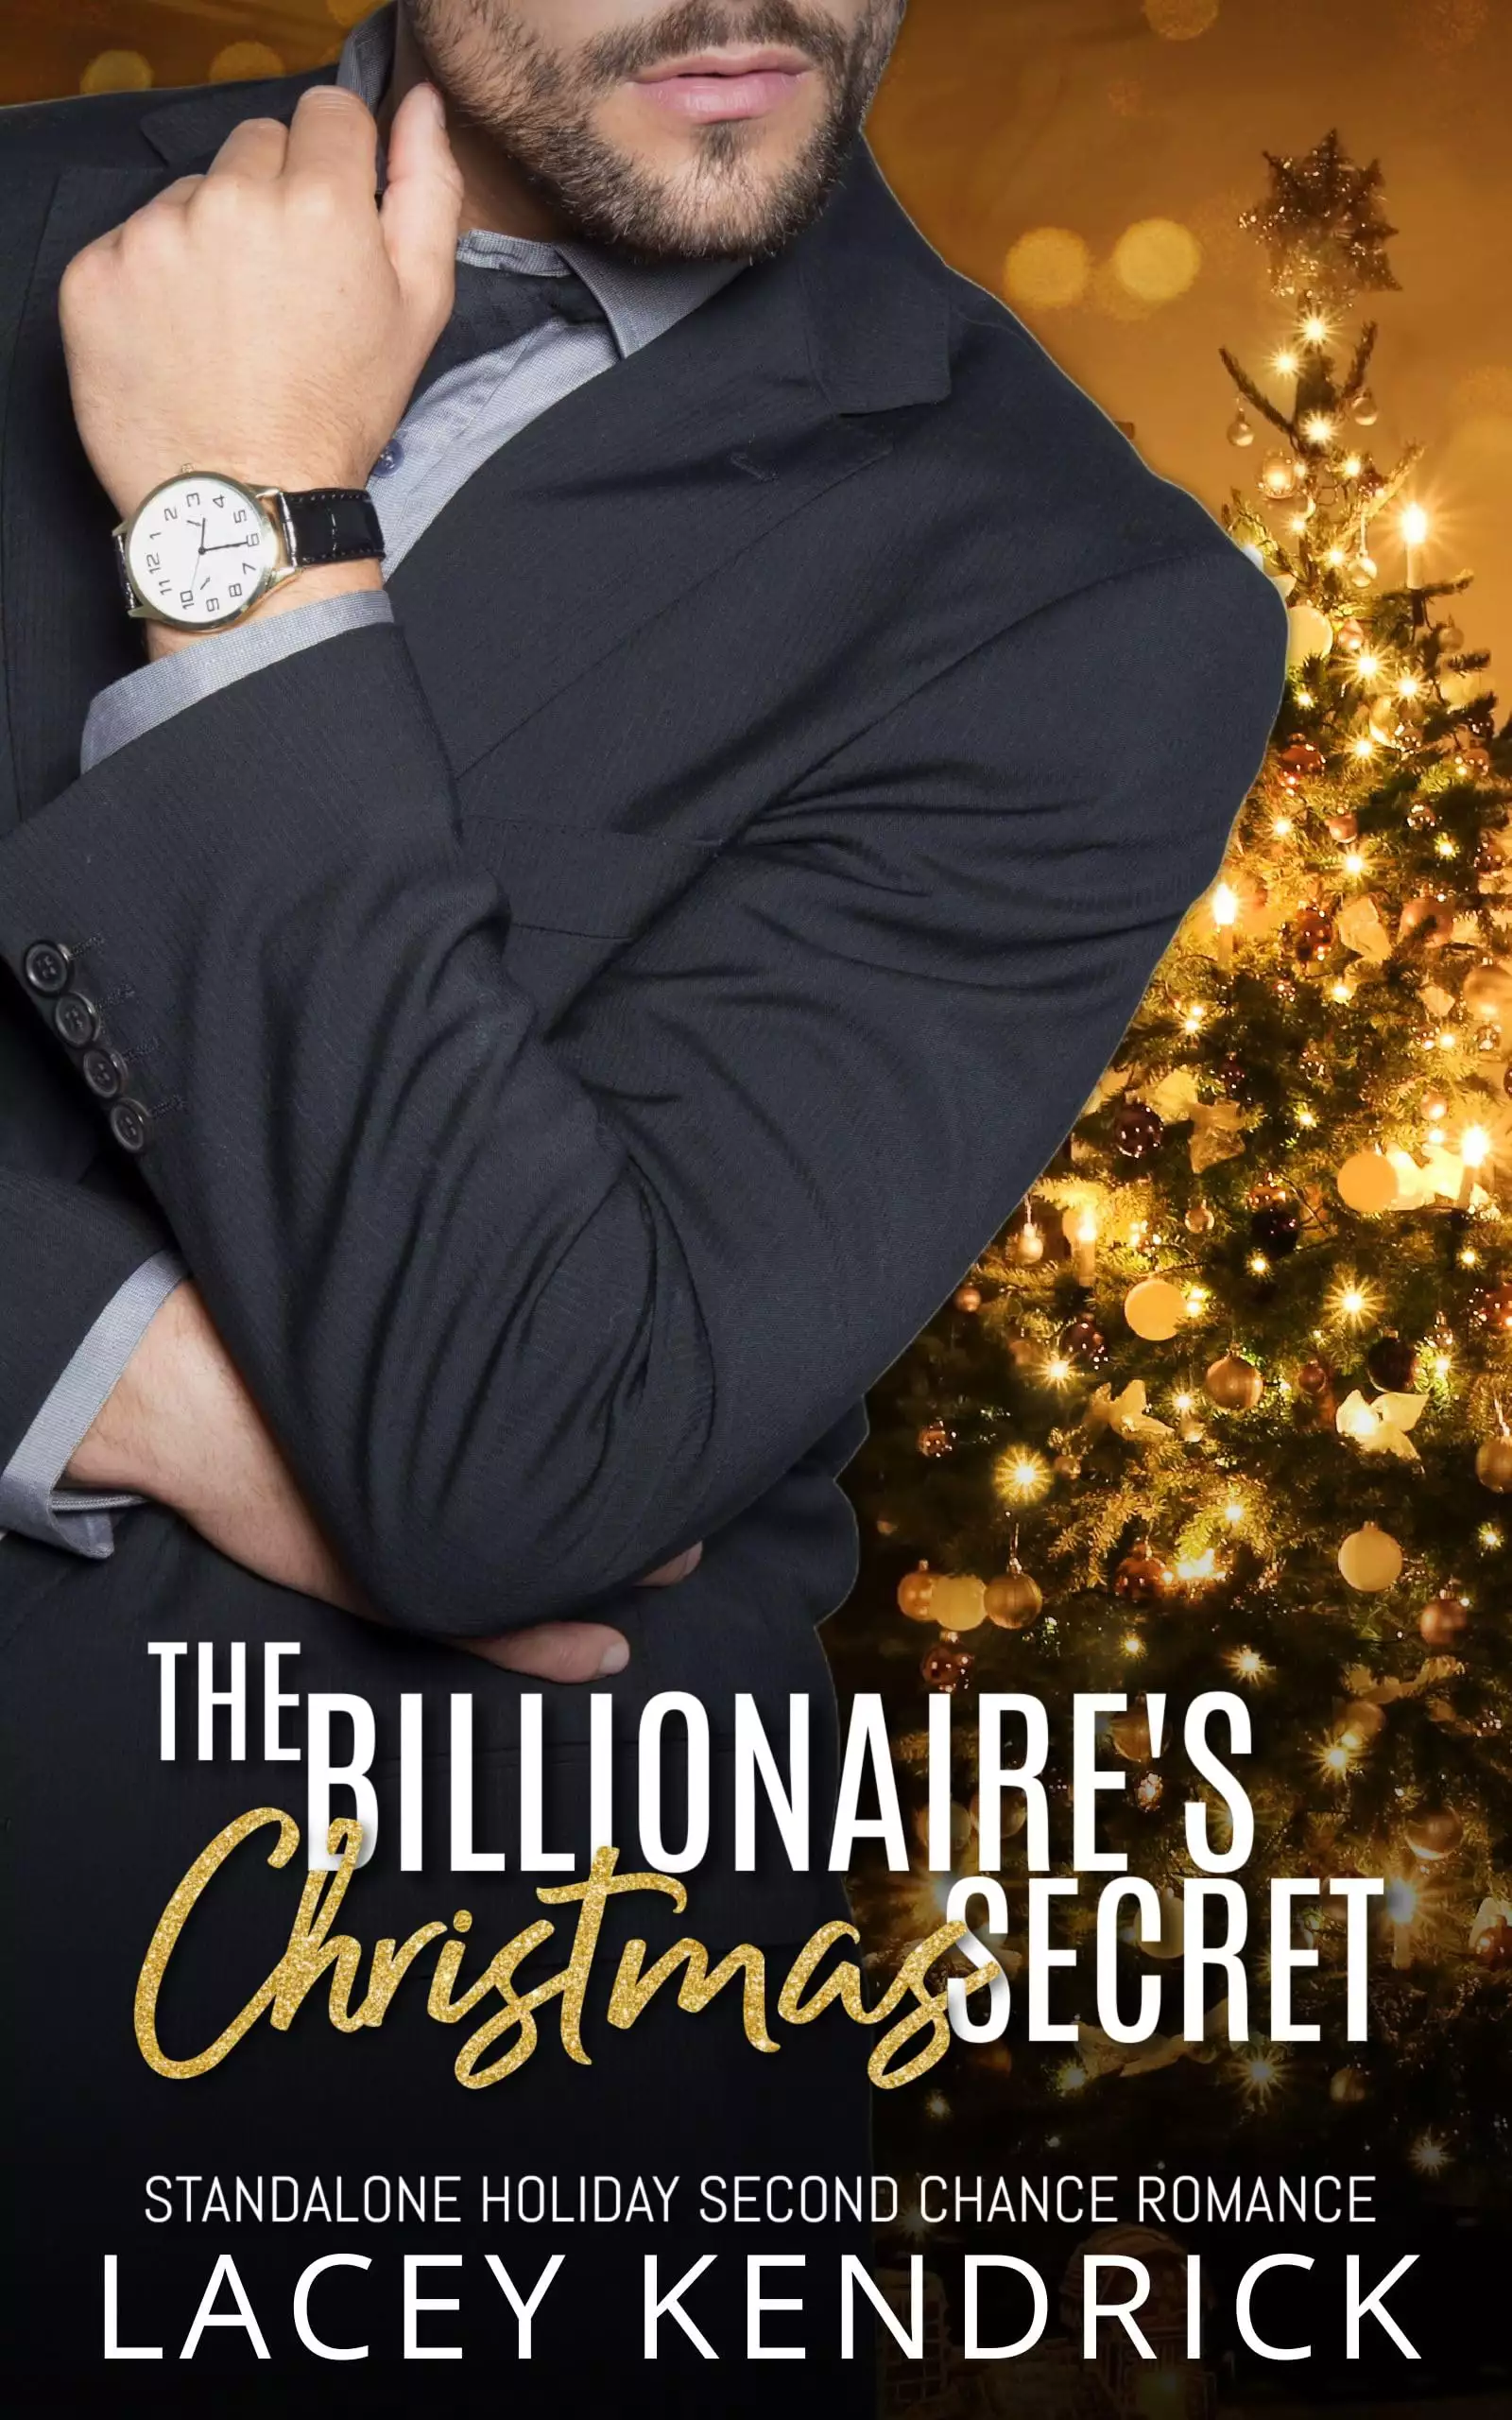 The Billionaire's Christmas Secret: A Holiday Second Chance Romance - Standalone